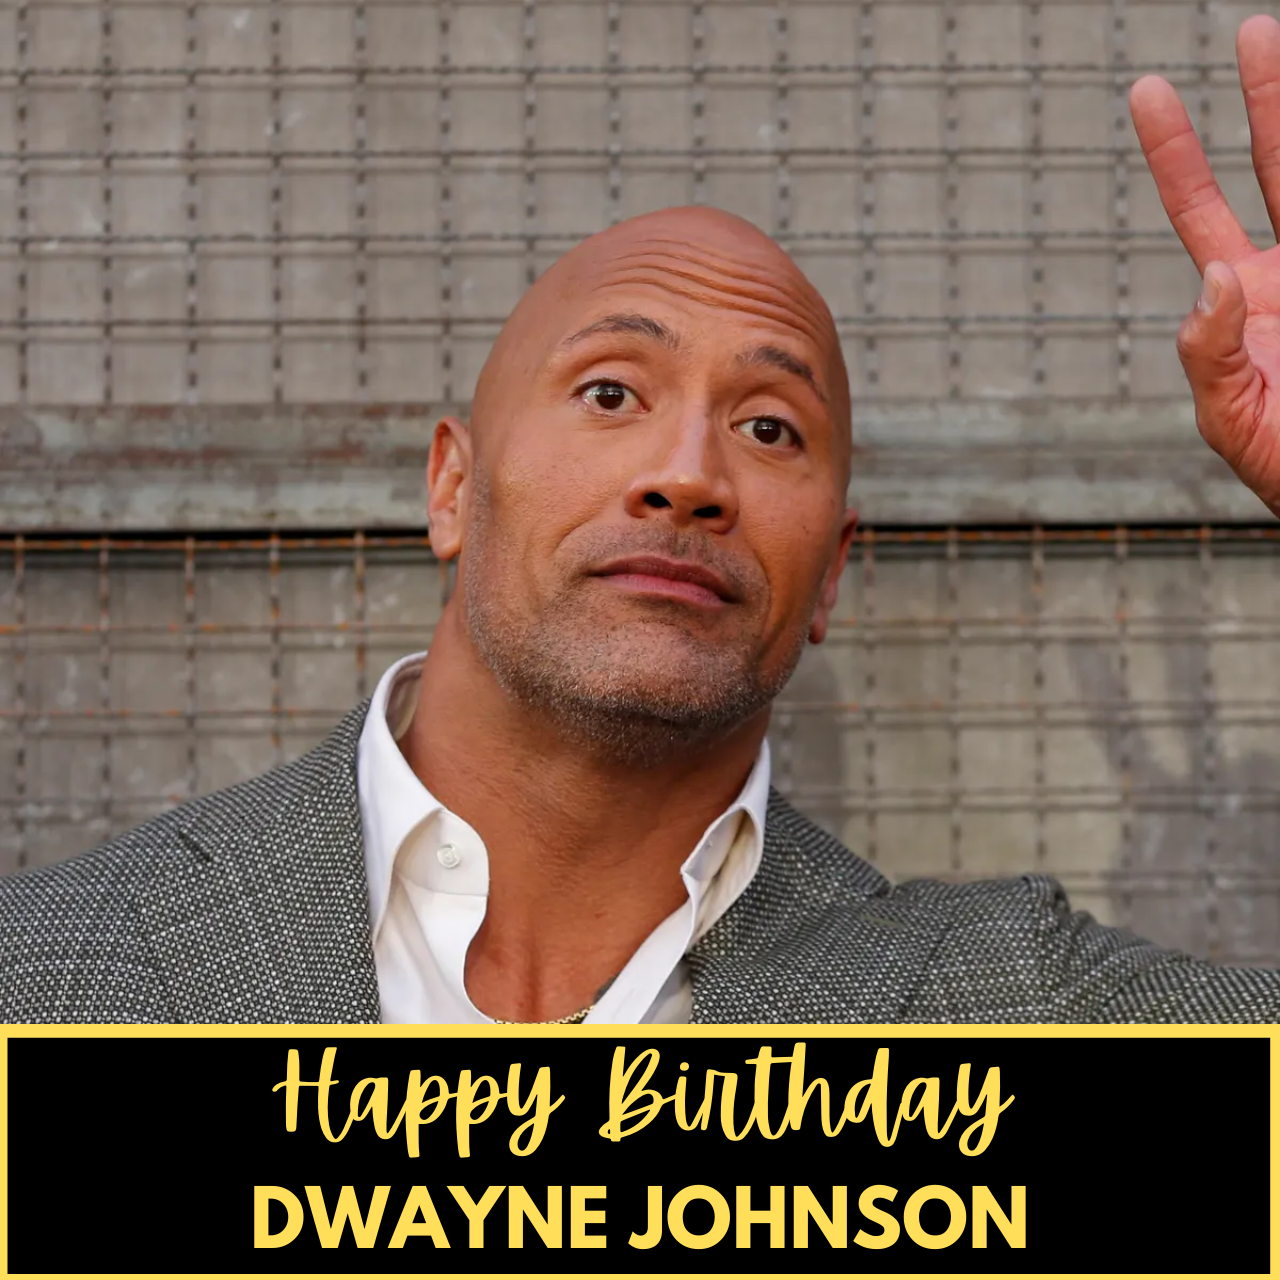 Happy Birthday Dwayne Johnson: Whatsapp Status Video Download for 49th Birthday of "The Rock"